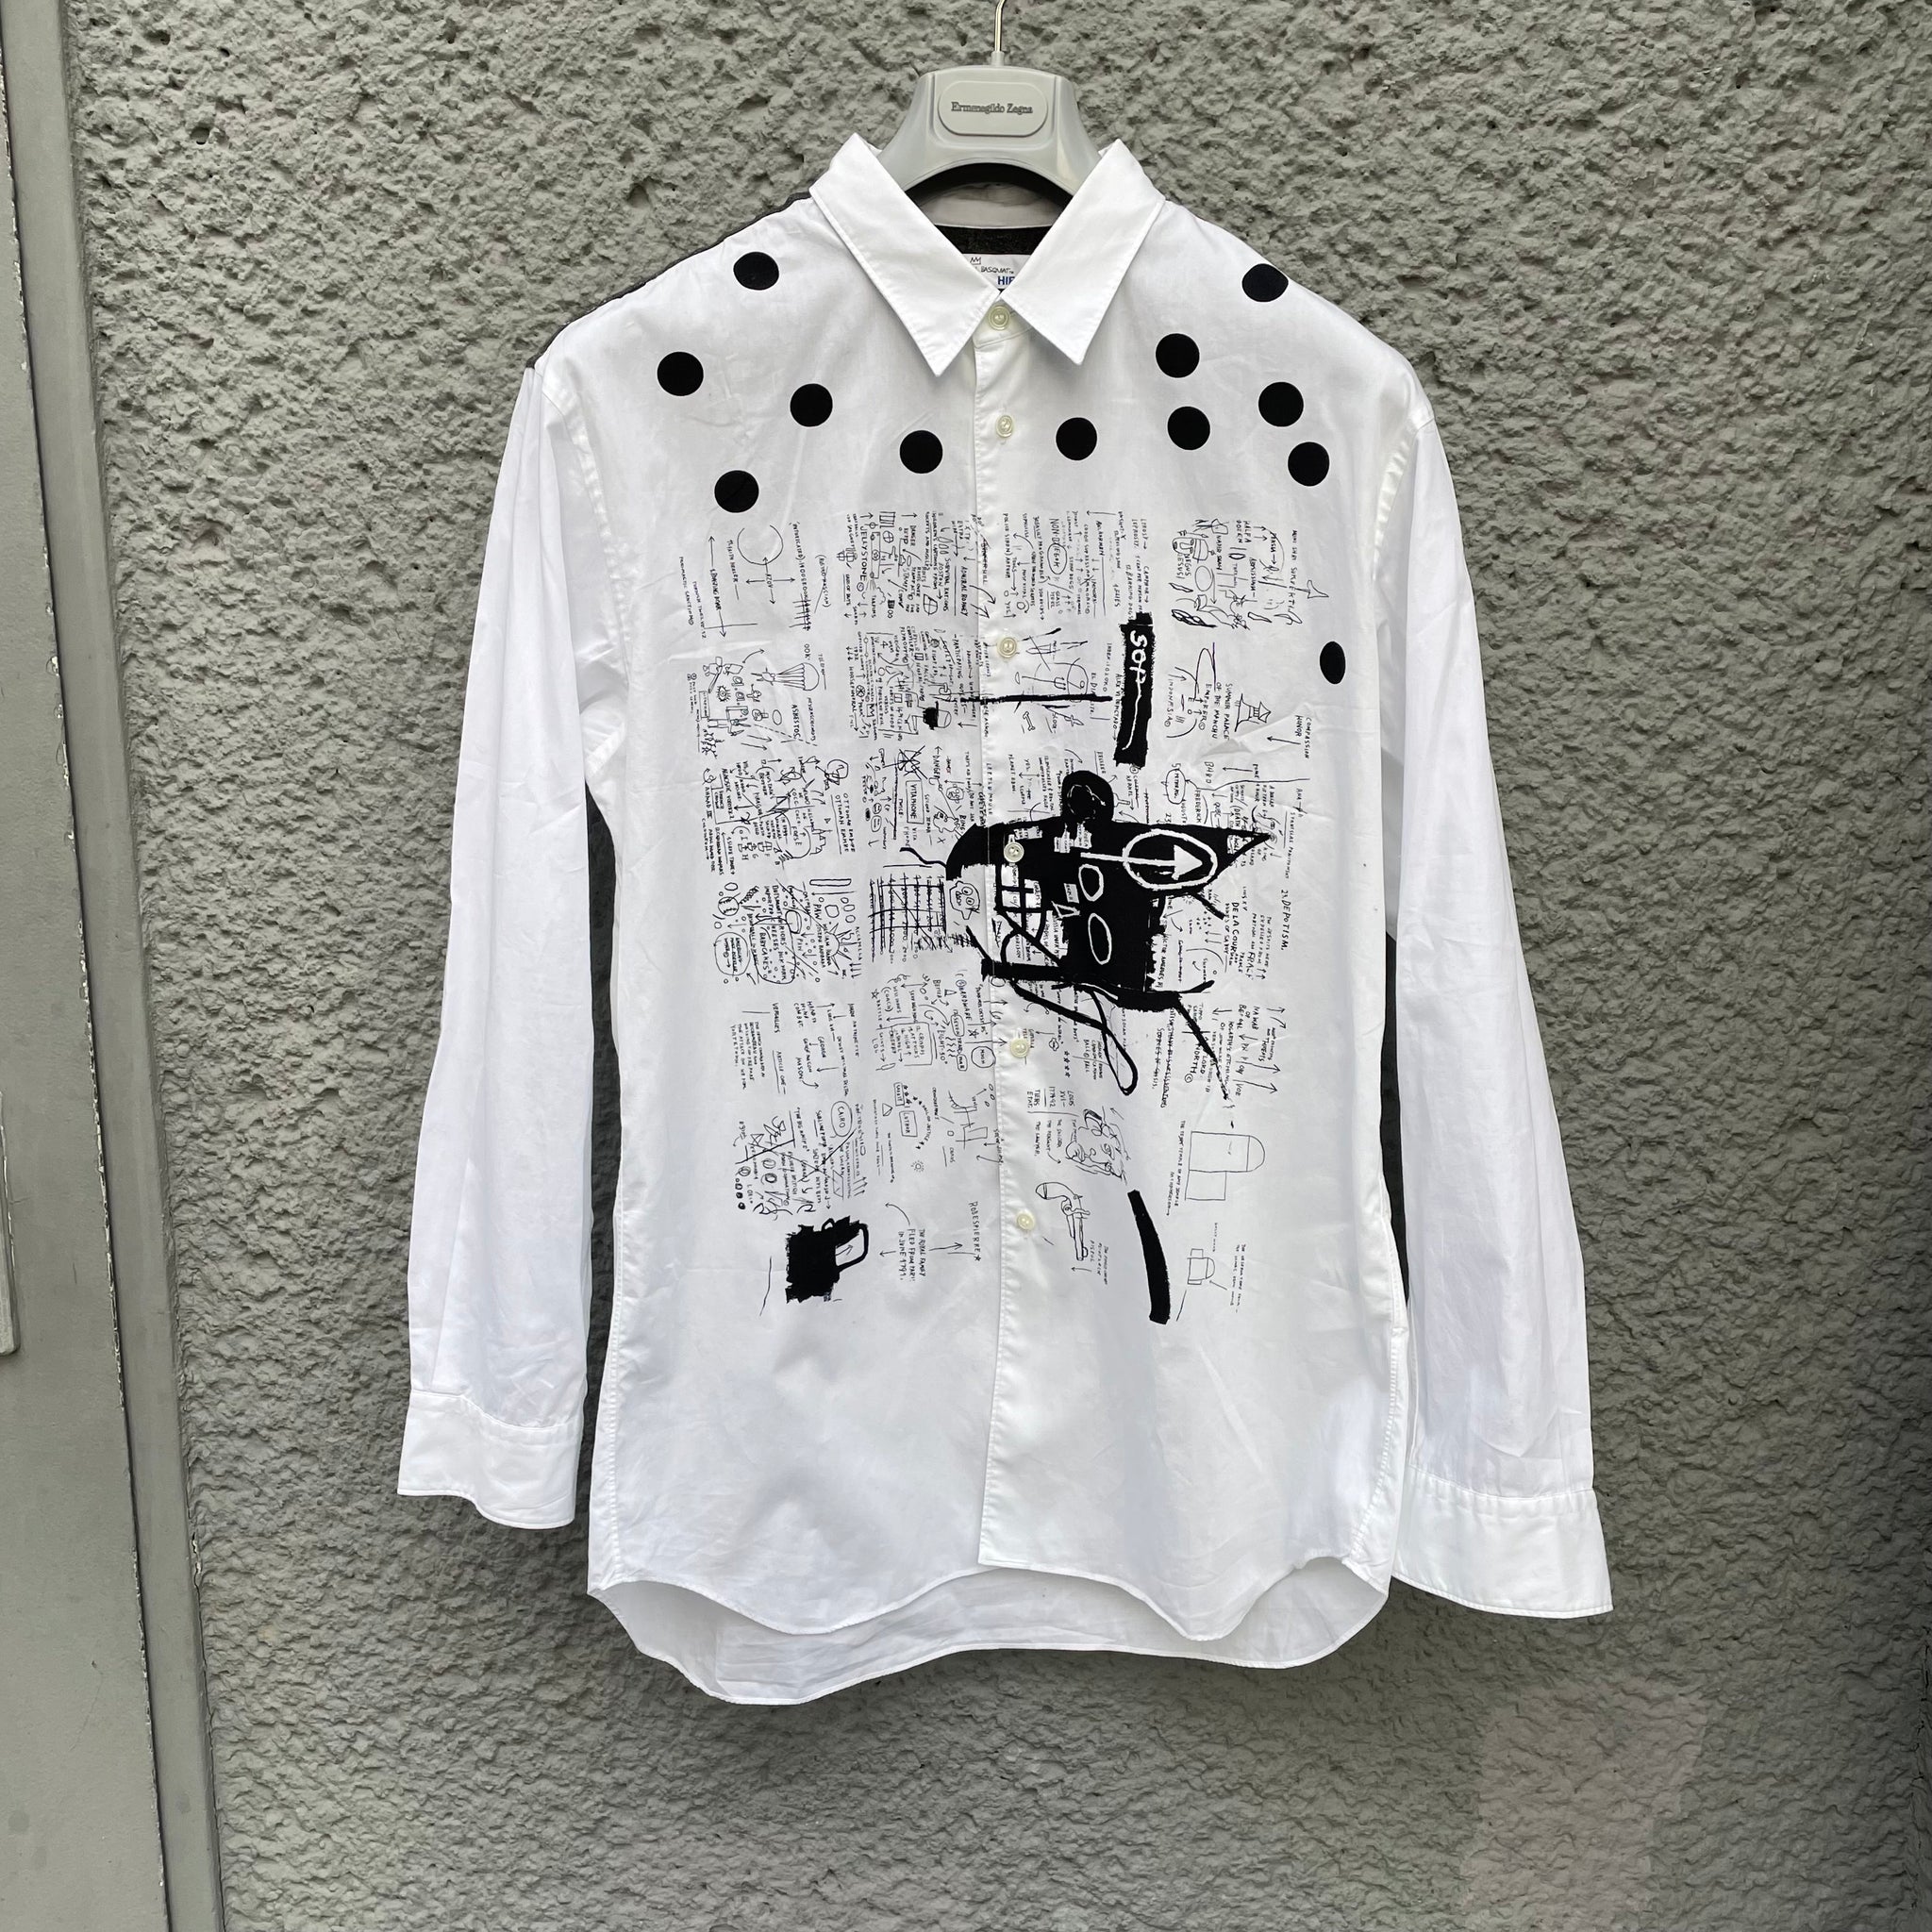 Comme des Garcons Shirt White Jean-Michel Basquiat Shirt F/W18 Runway